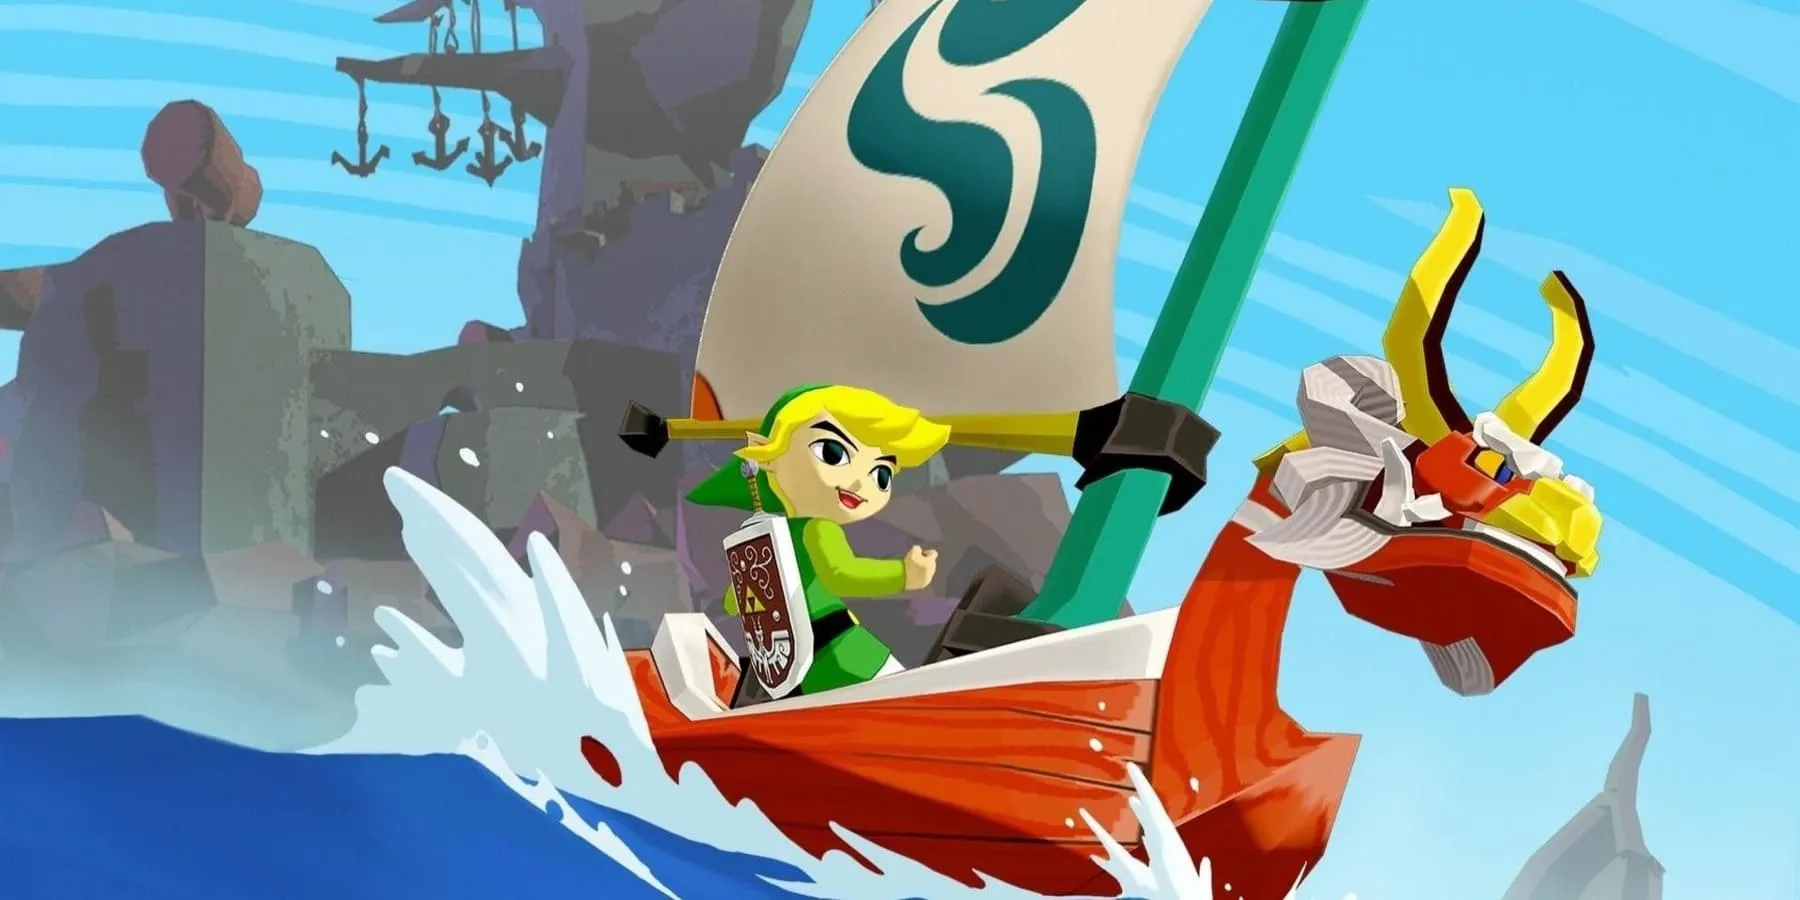 The Legend Of Zelda: The Wind Waker